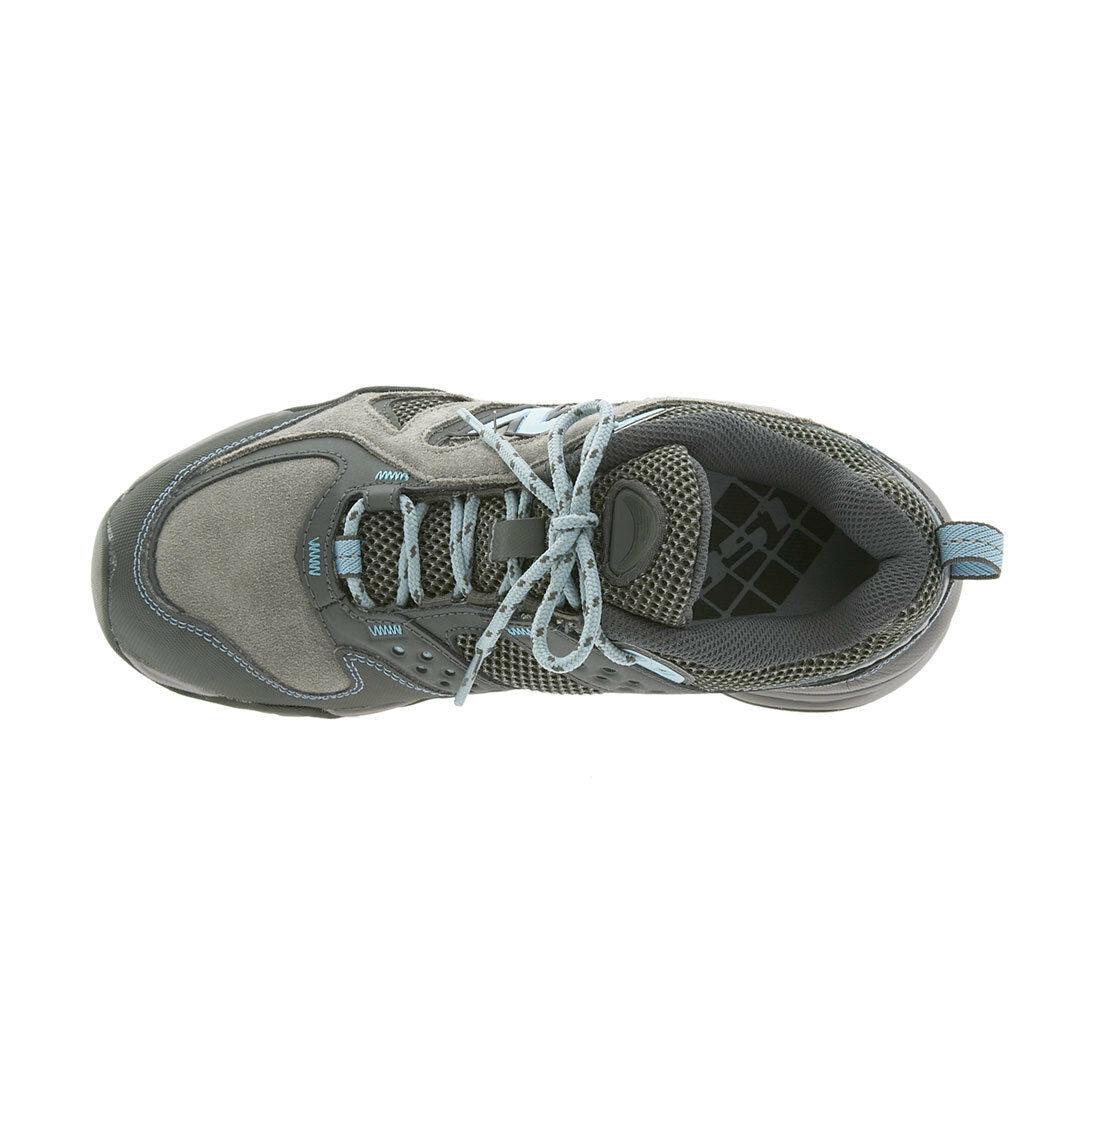 New Balance Multi Sport Hiking Shoes WO851 GR  Sz US 7 UK 5  EU 37.5  24 cm - SVNYFancy